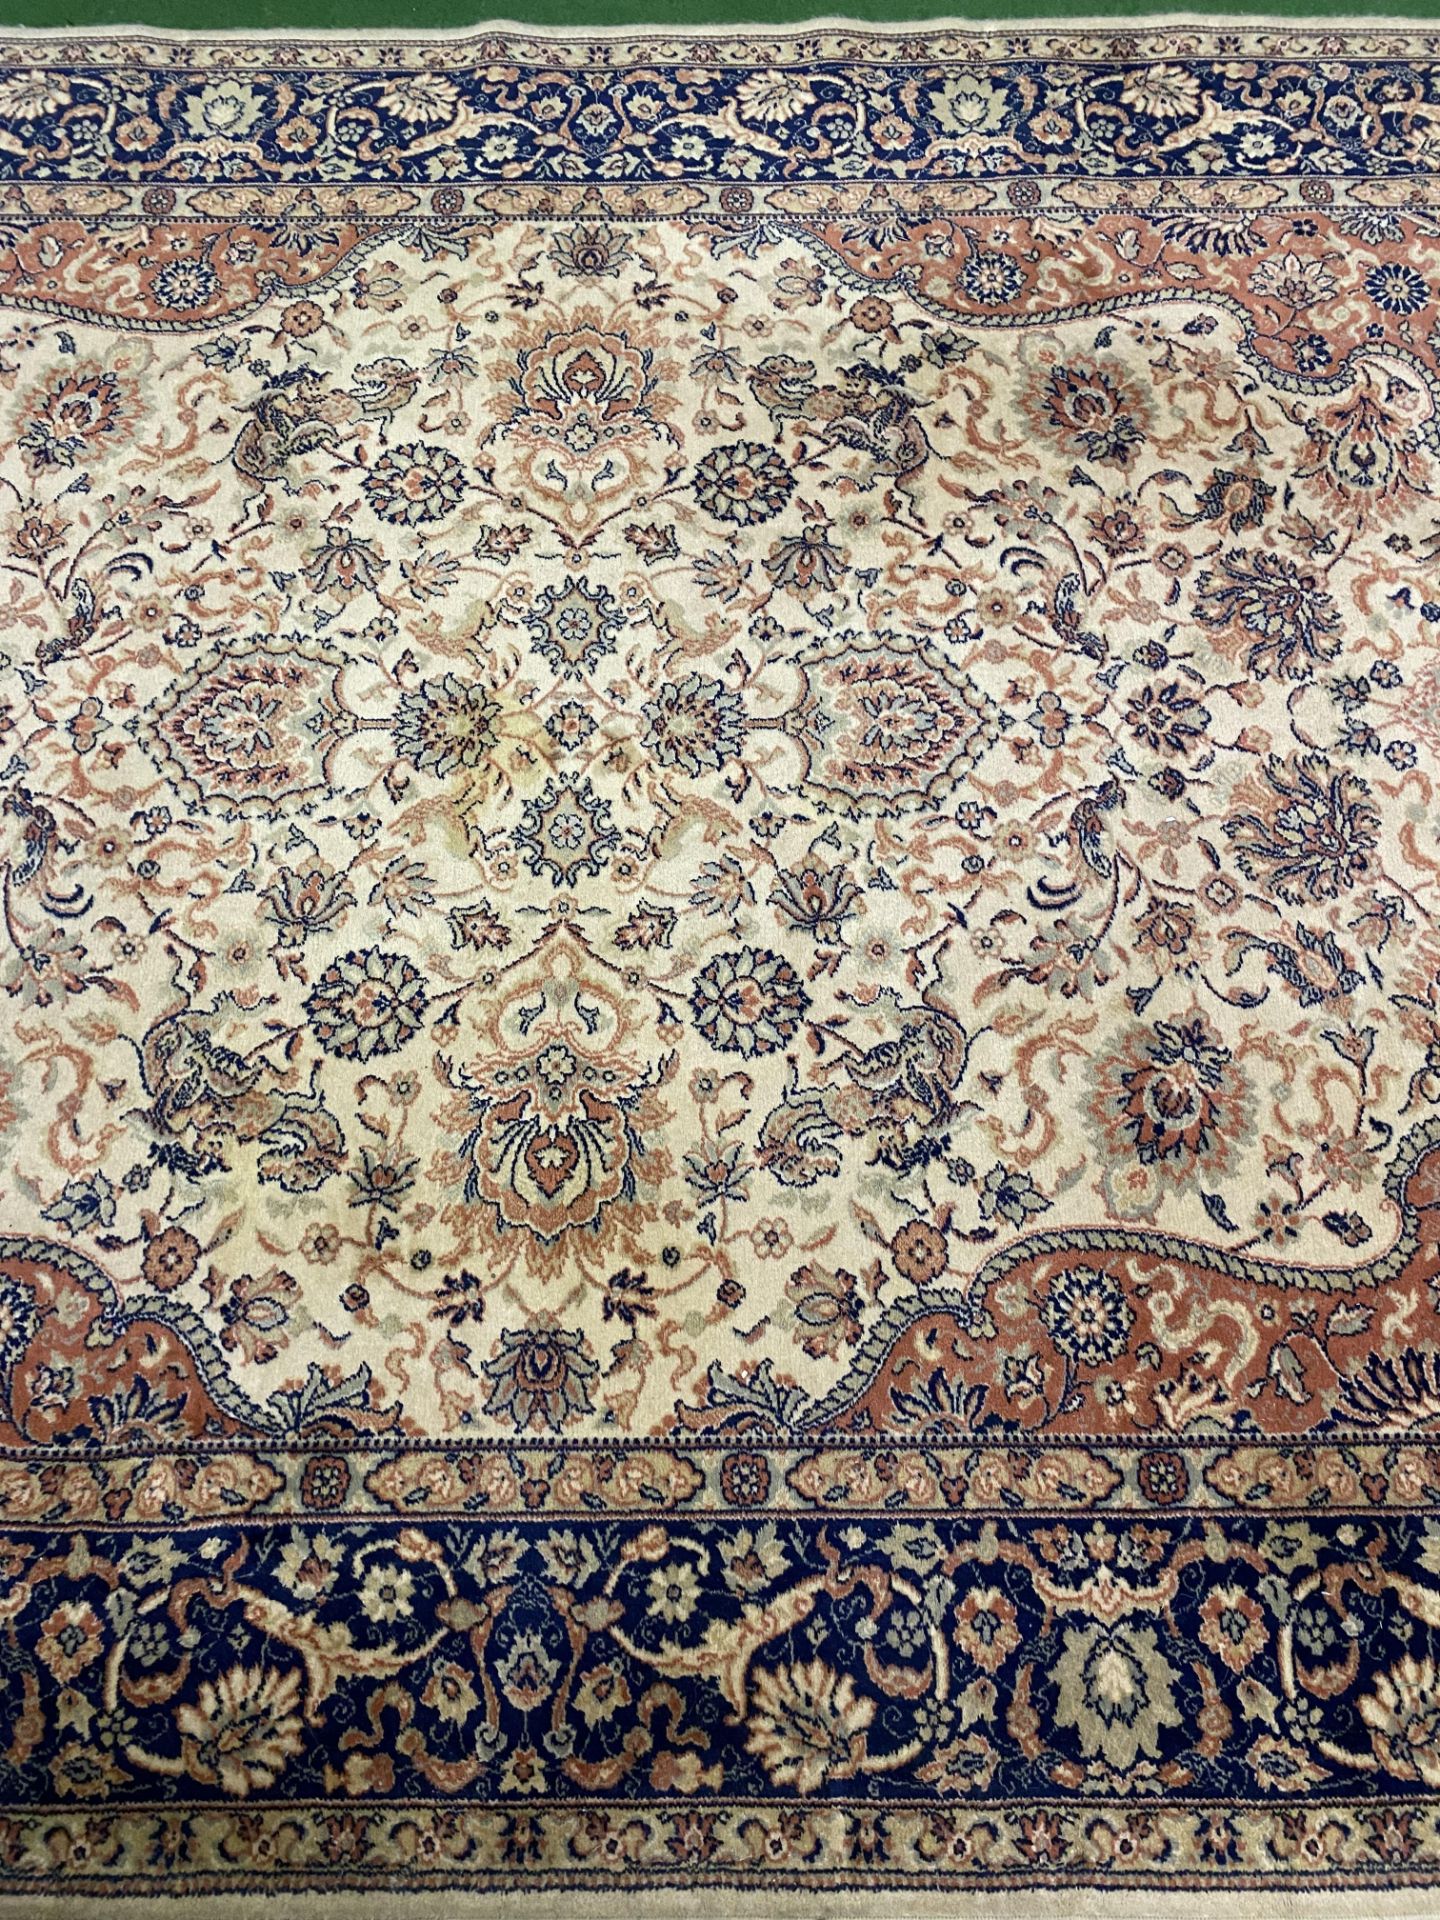 Cream ground wool carpet - Image 4 of 5